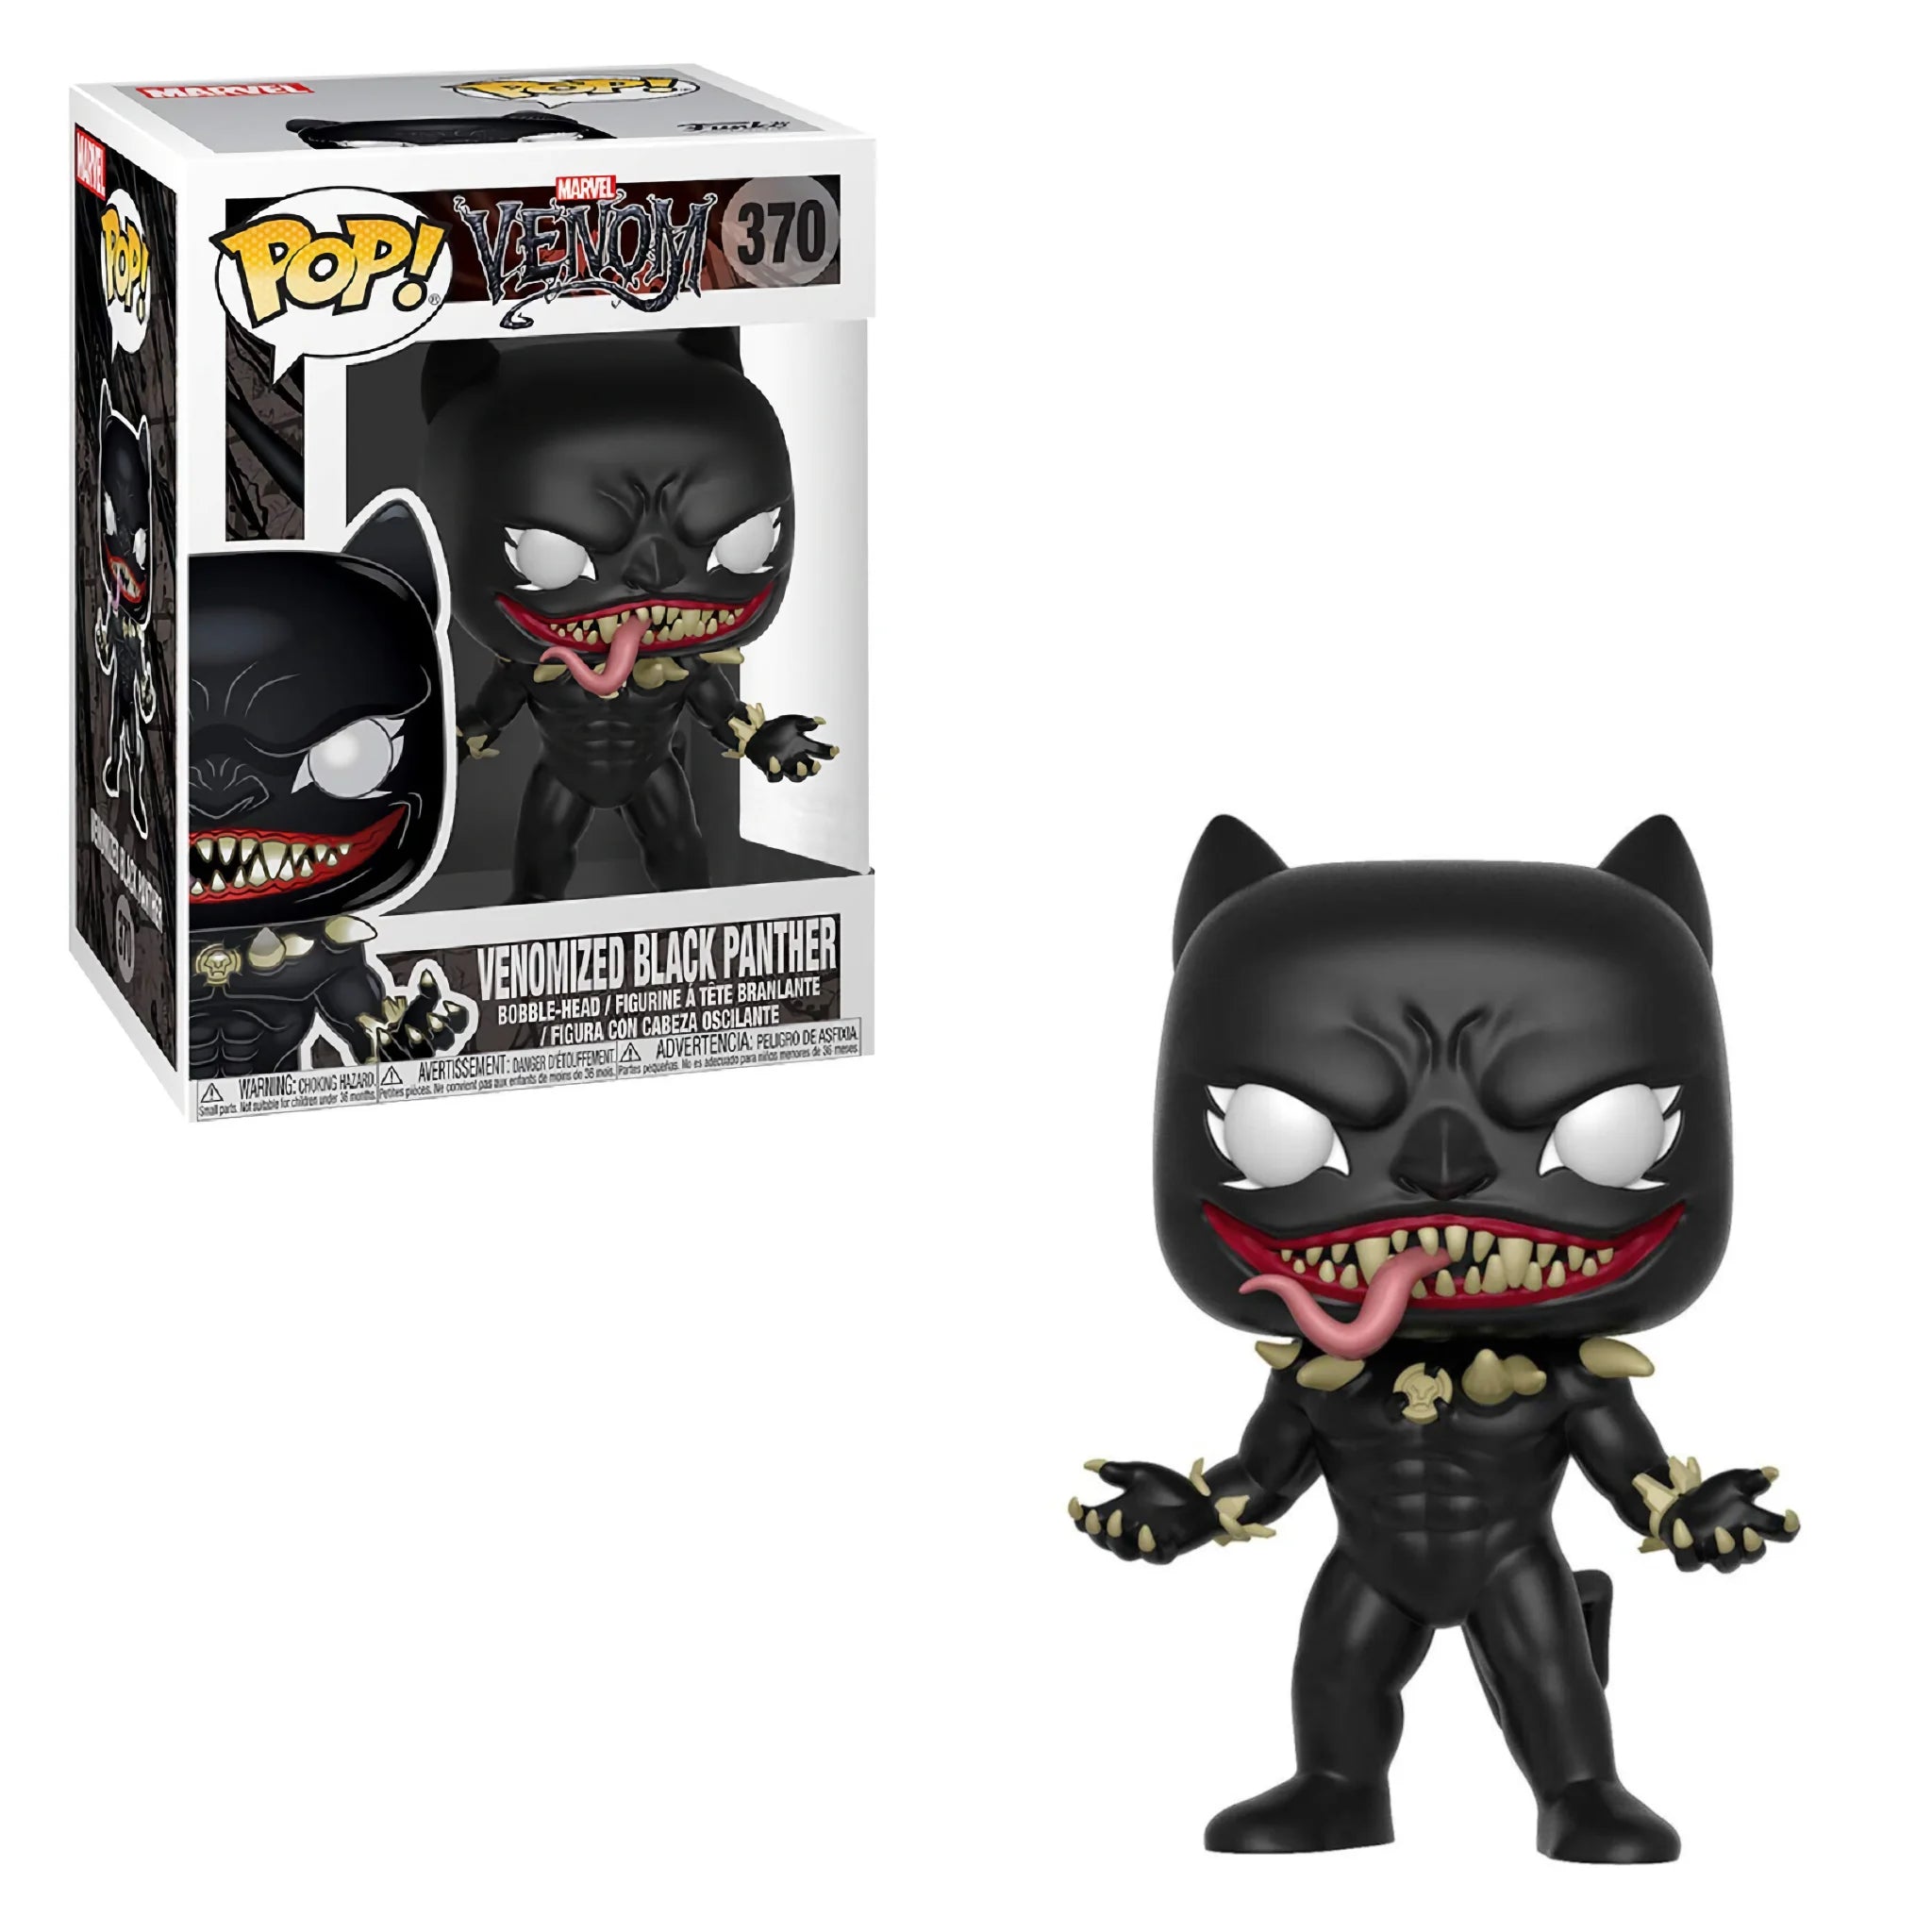 Marvel Funko Pop! Venom Mystery Box Game Stop exclusive